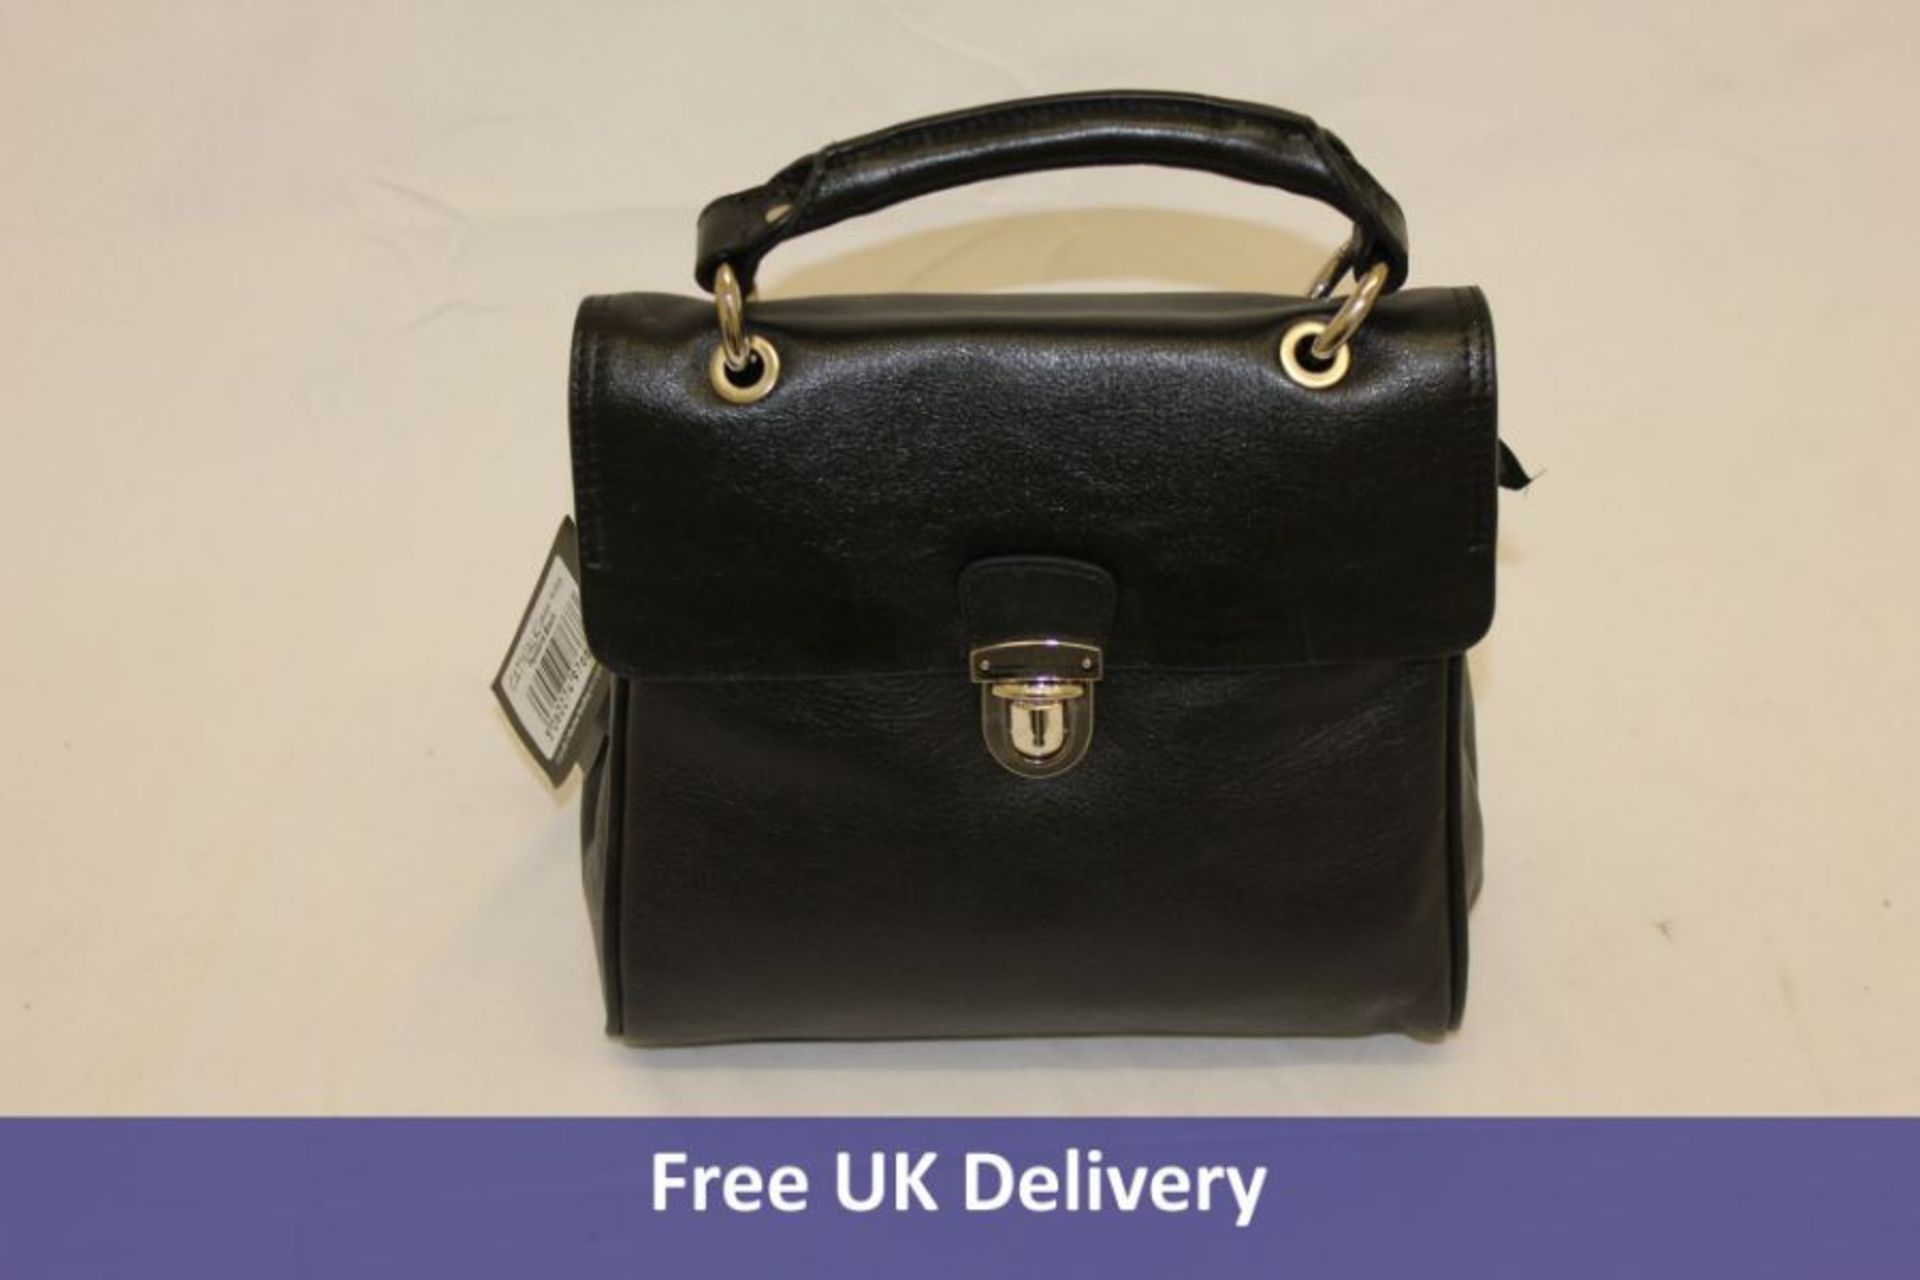 Three Catwalk Collection Handbags to include 3x Vintage Leather Handbag Shoulder, Bag/Cross Body Bag